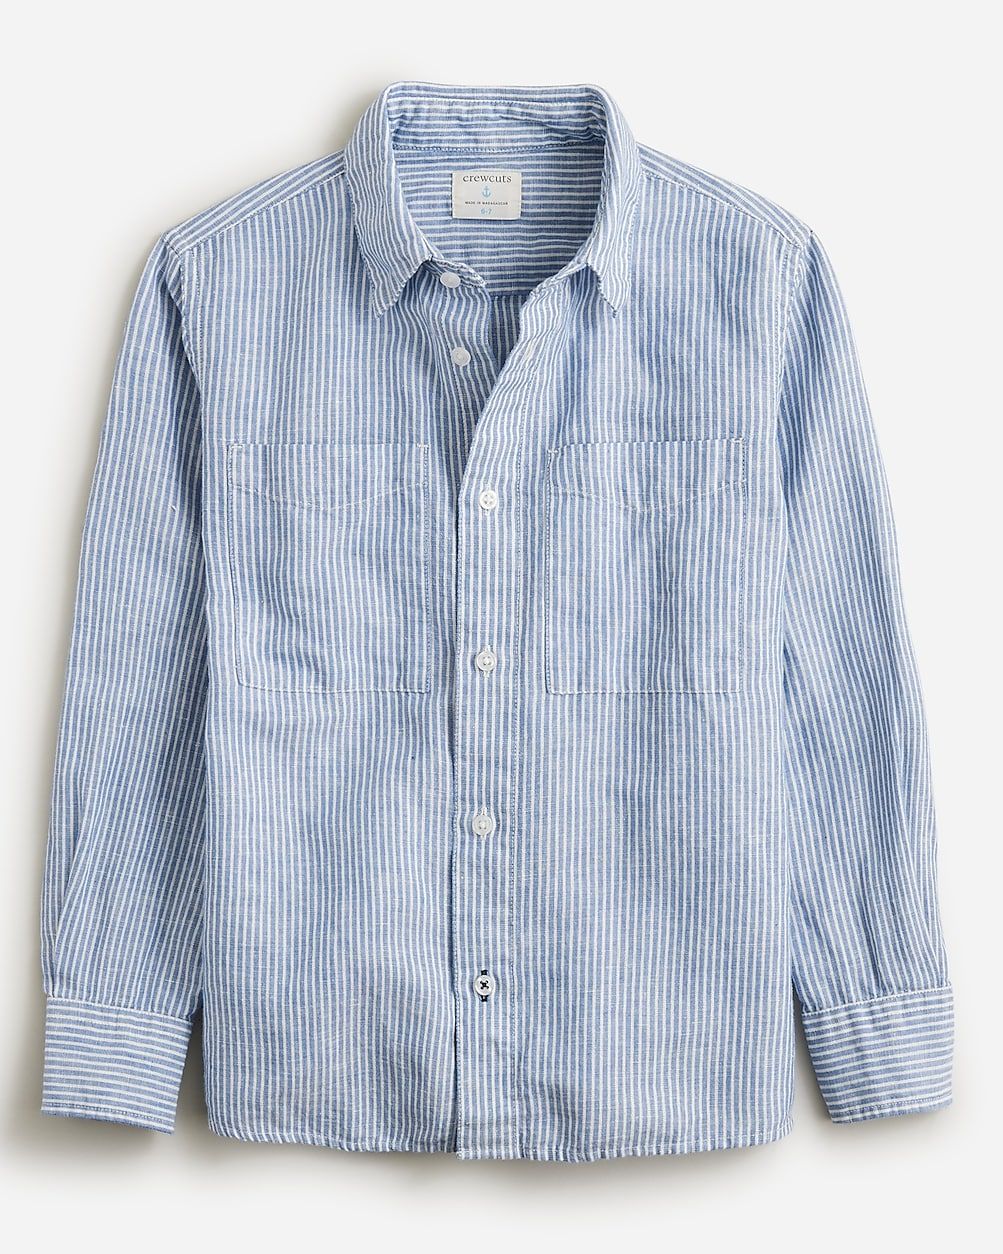 Boys' long-sleeve camp shirt in linen-cotton blend | J.Crew US